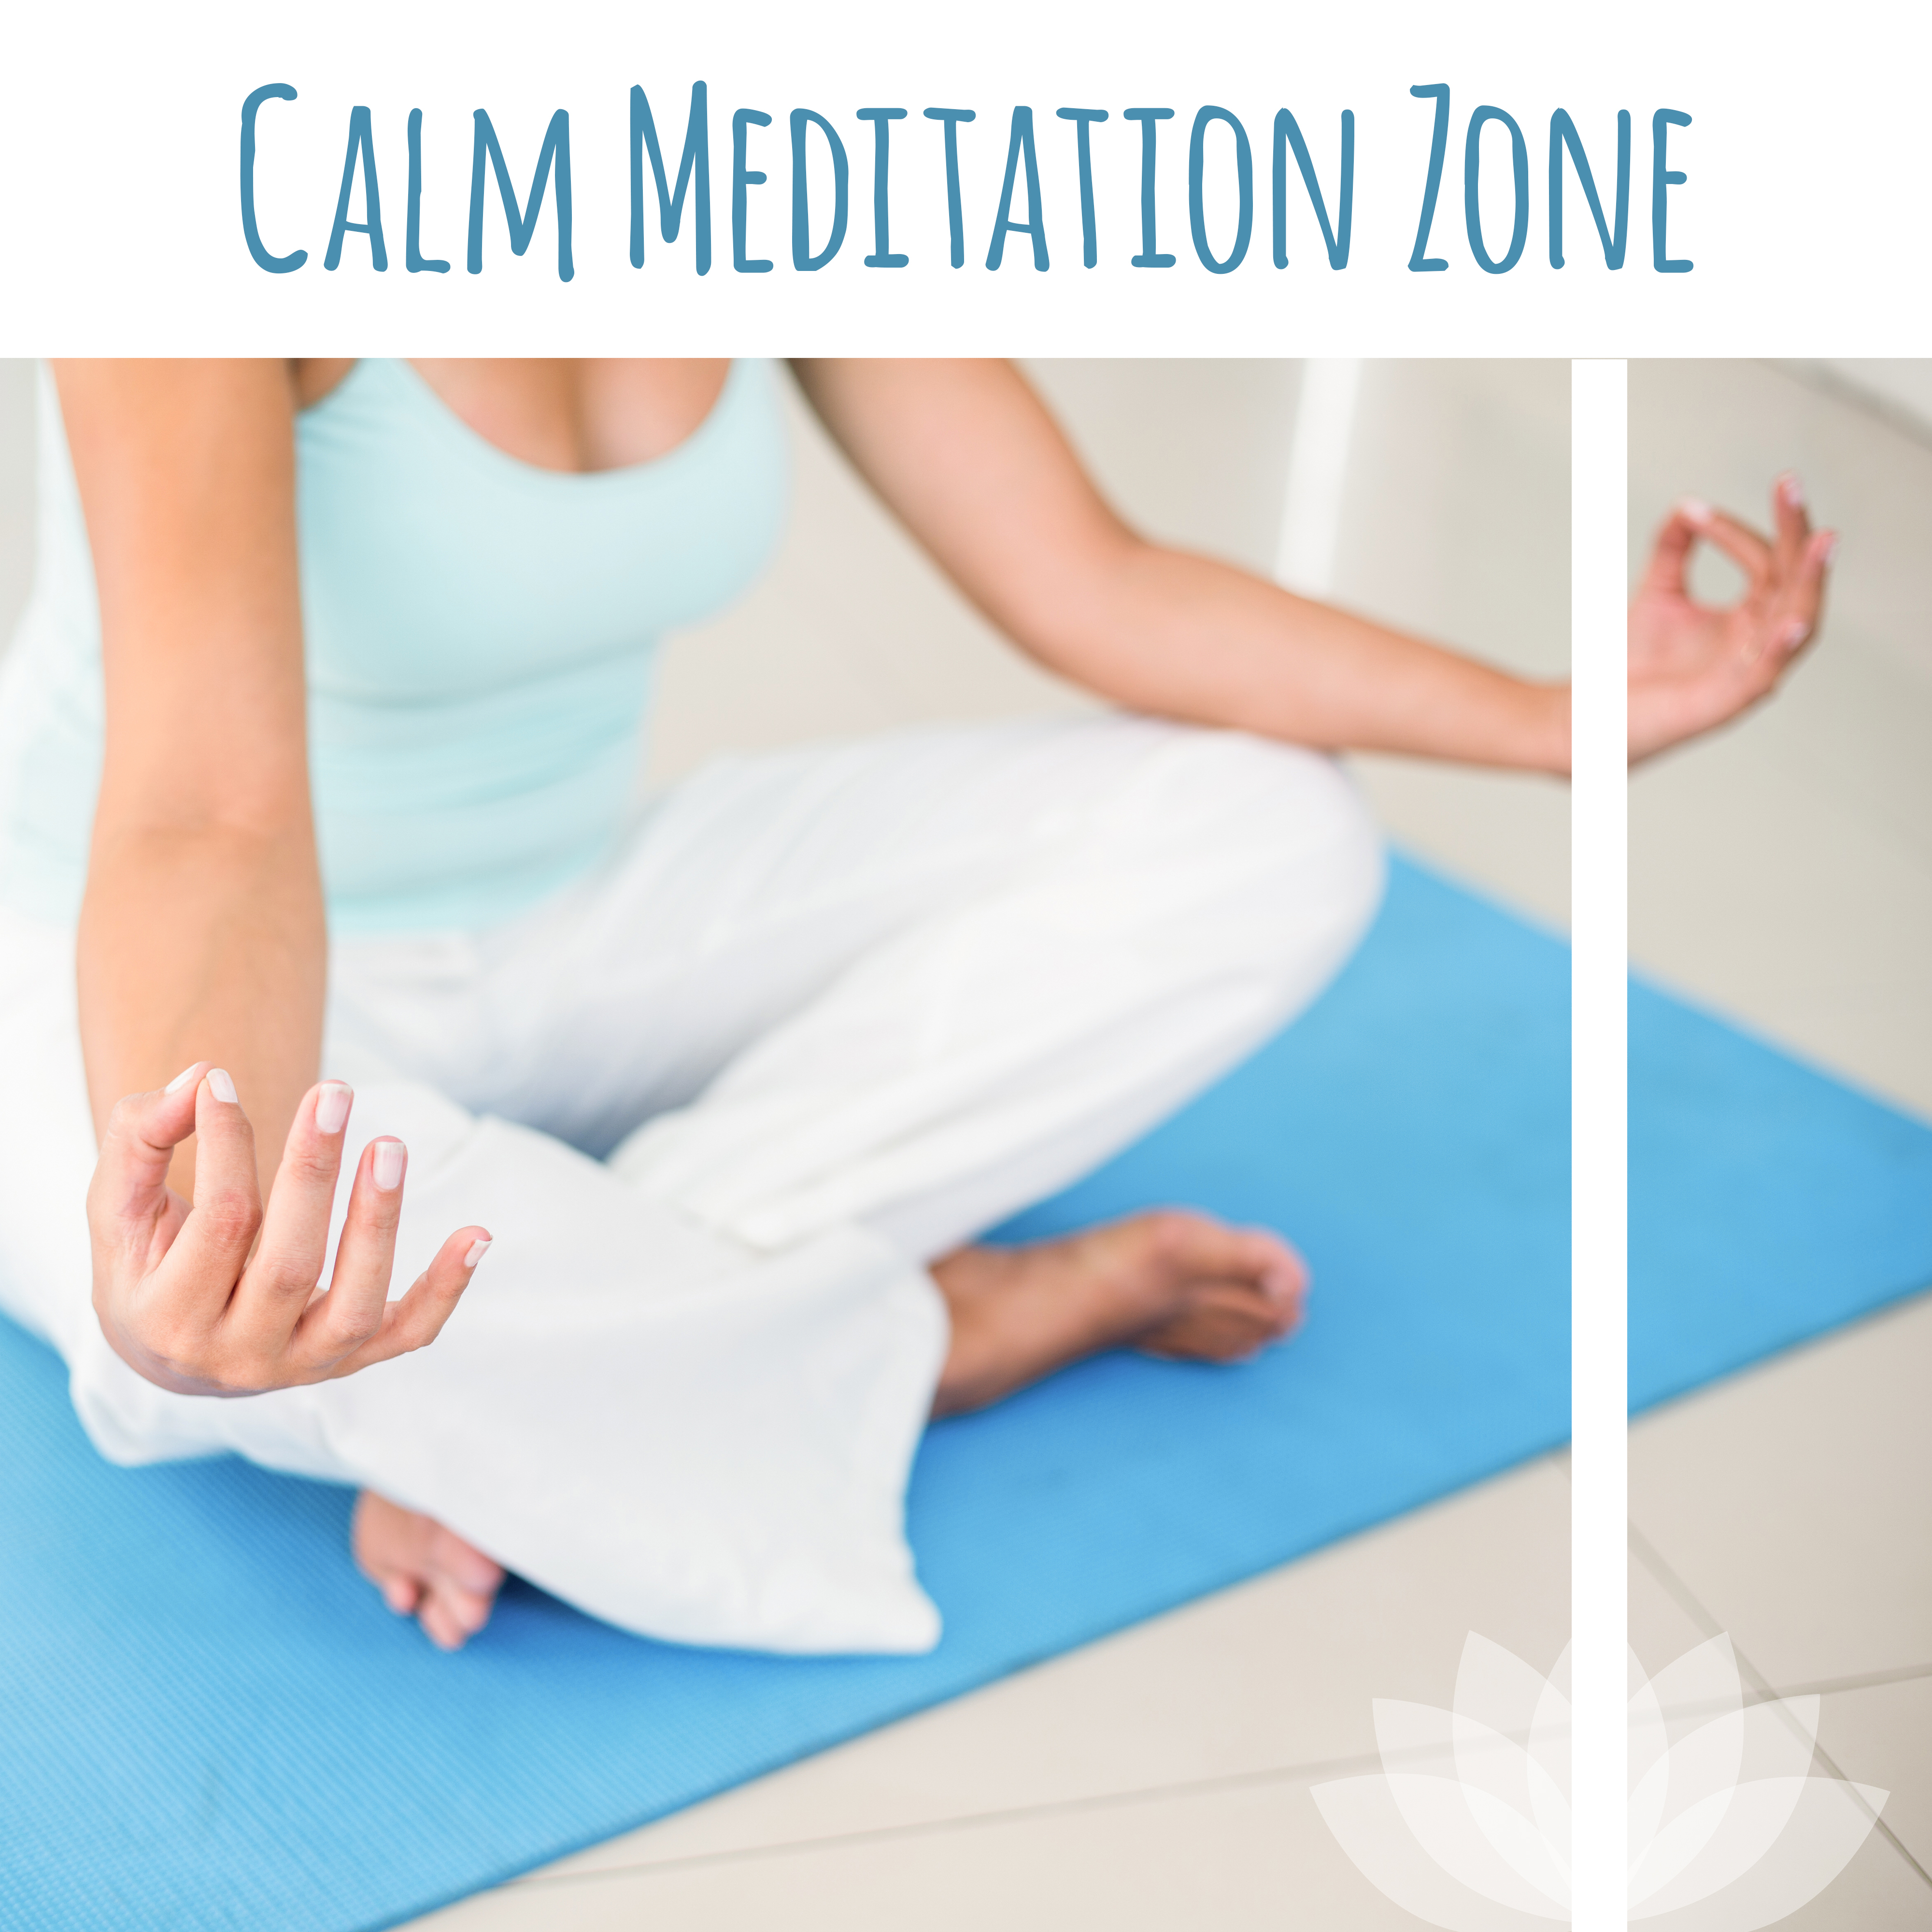 Calm Meditation Zone